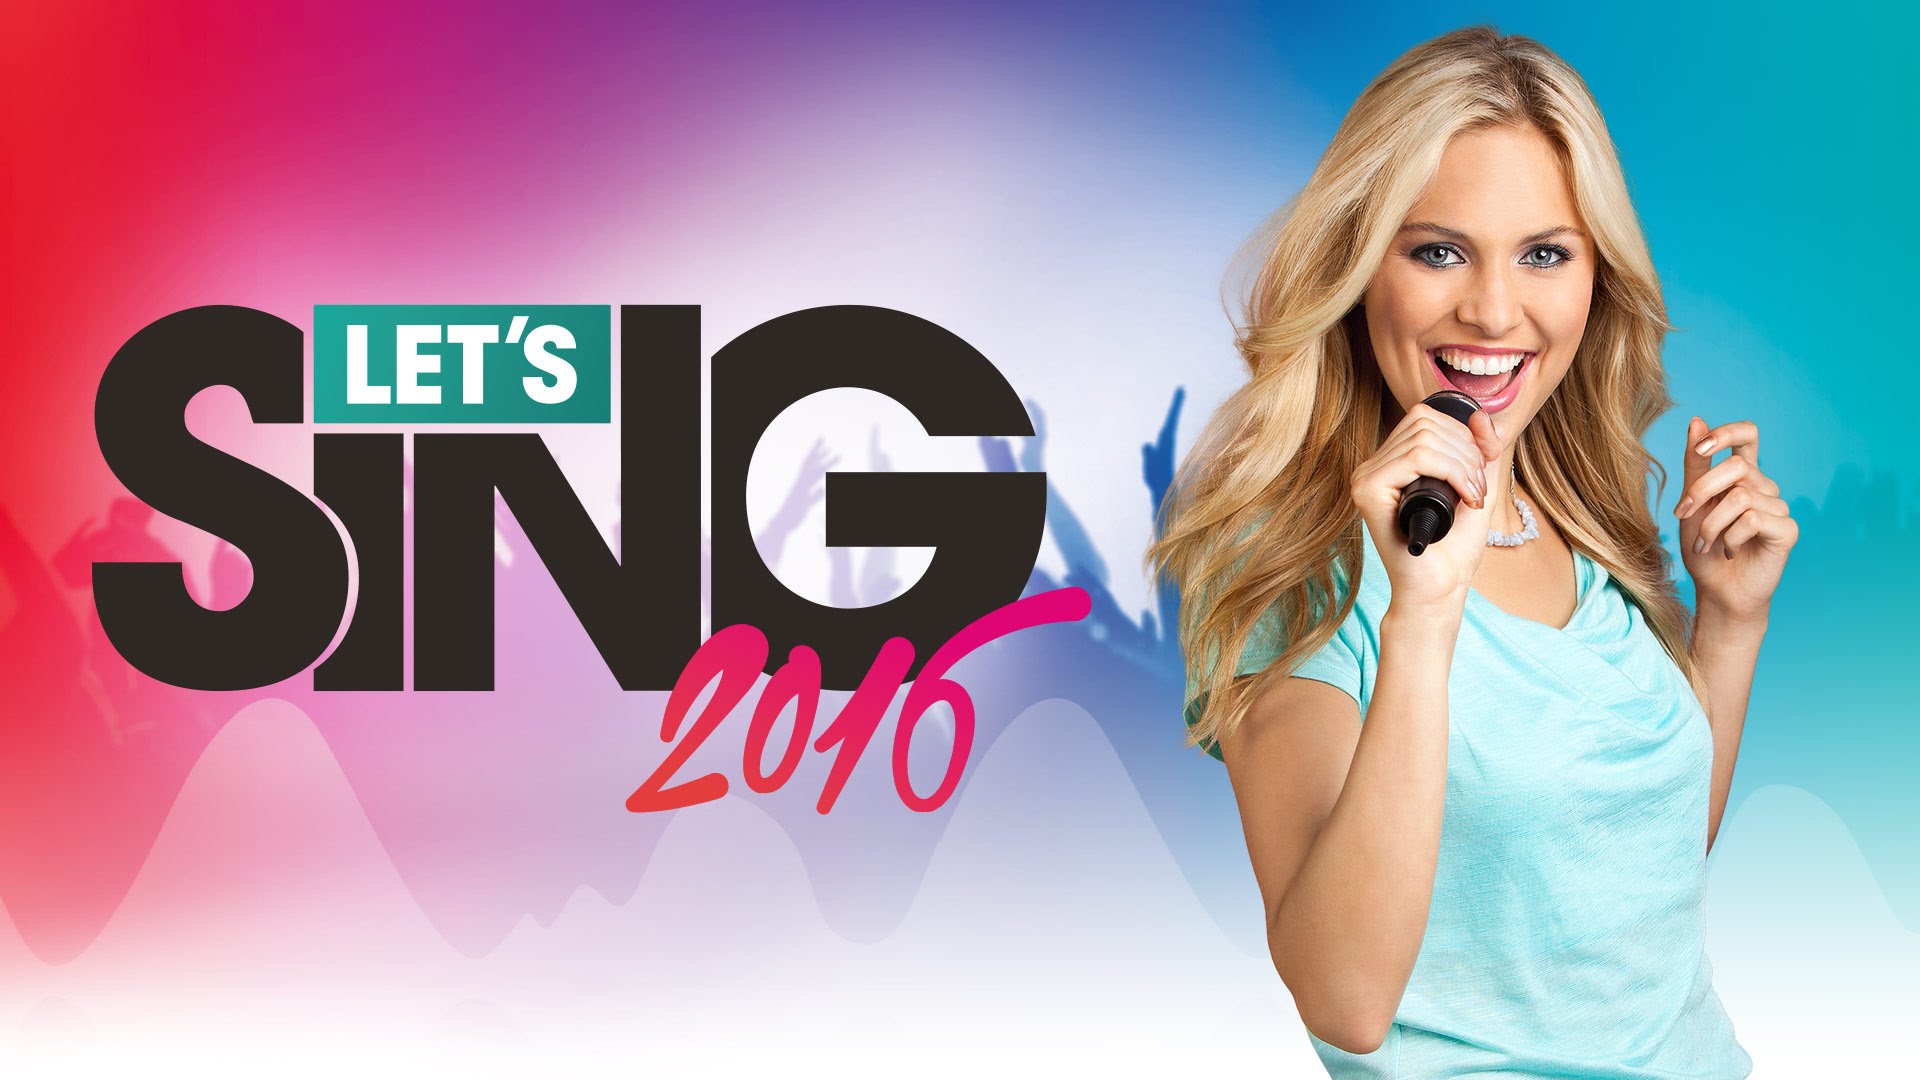 Let’s Sing 2016 è disponibile su Playstation 4, Wii e Xbox One